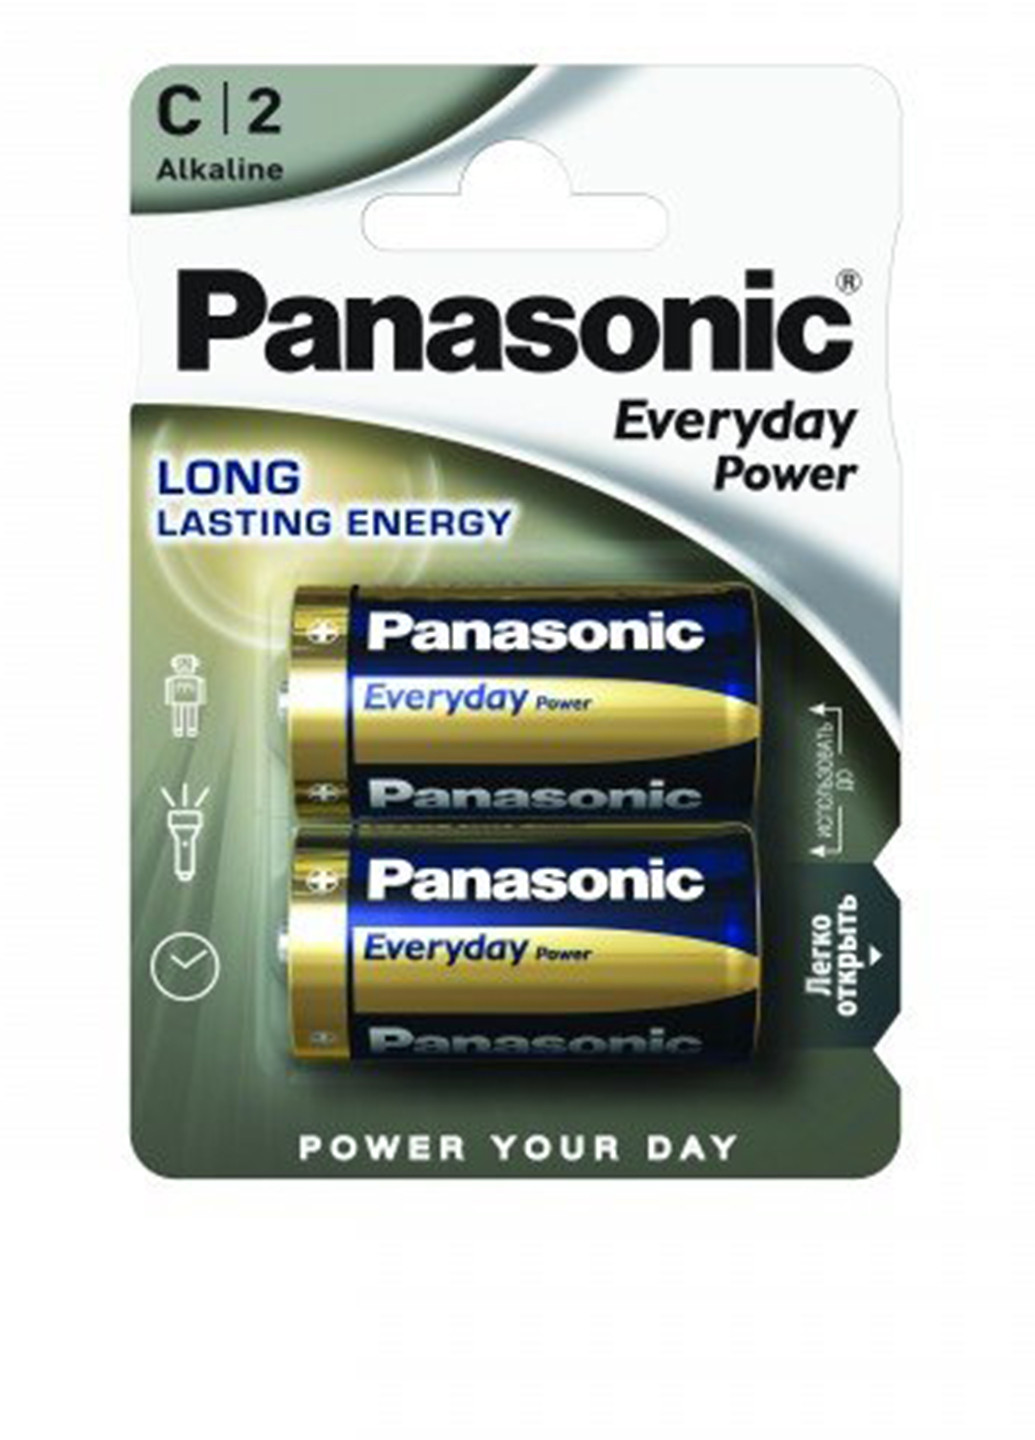 Батарейка Panasonic everyday power c bli 2 alkaline (lr14ree/2br) (138004348)